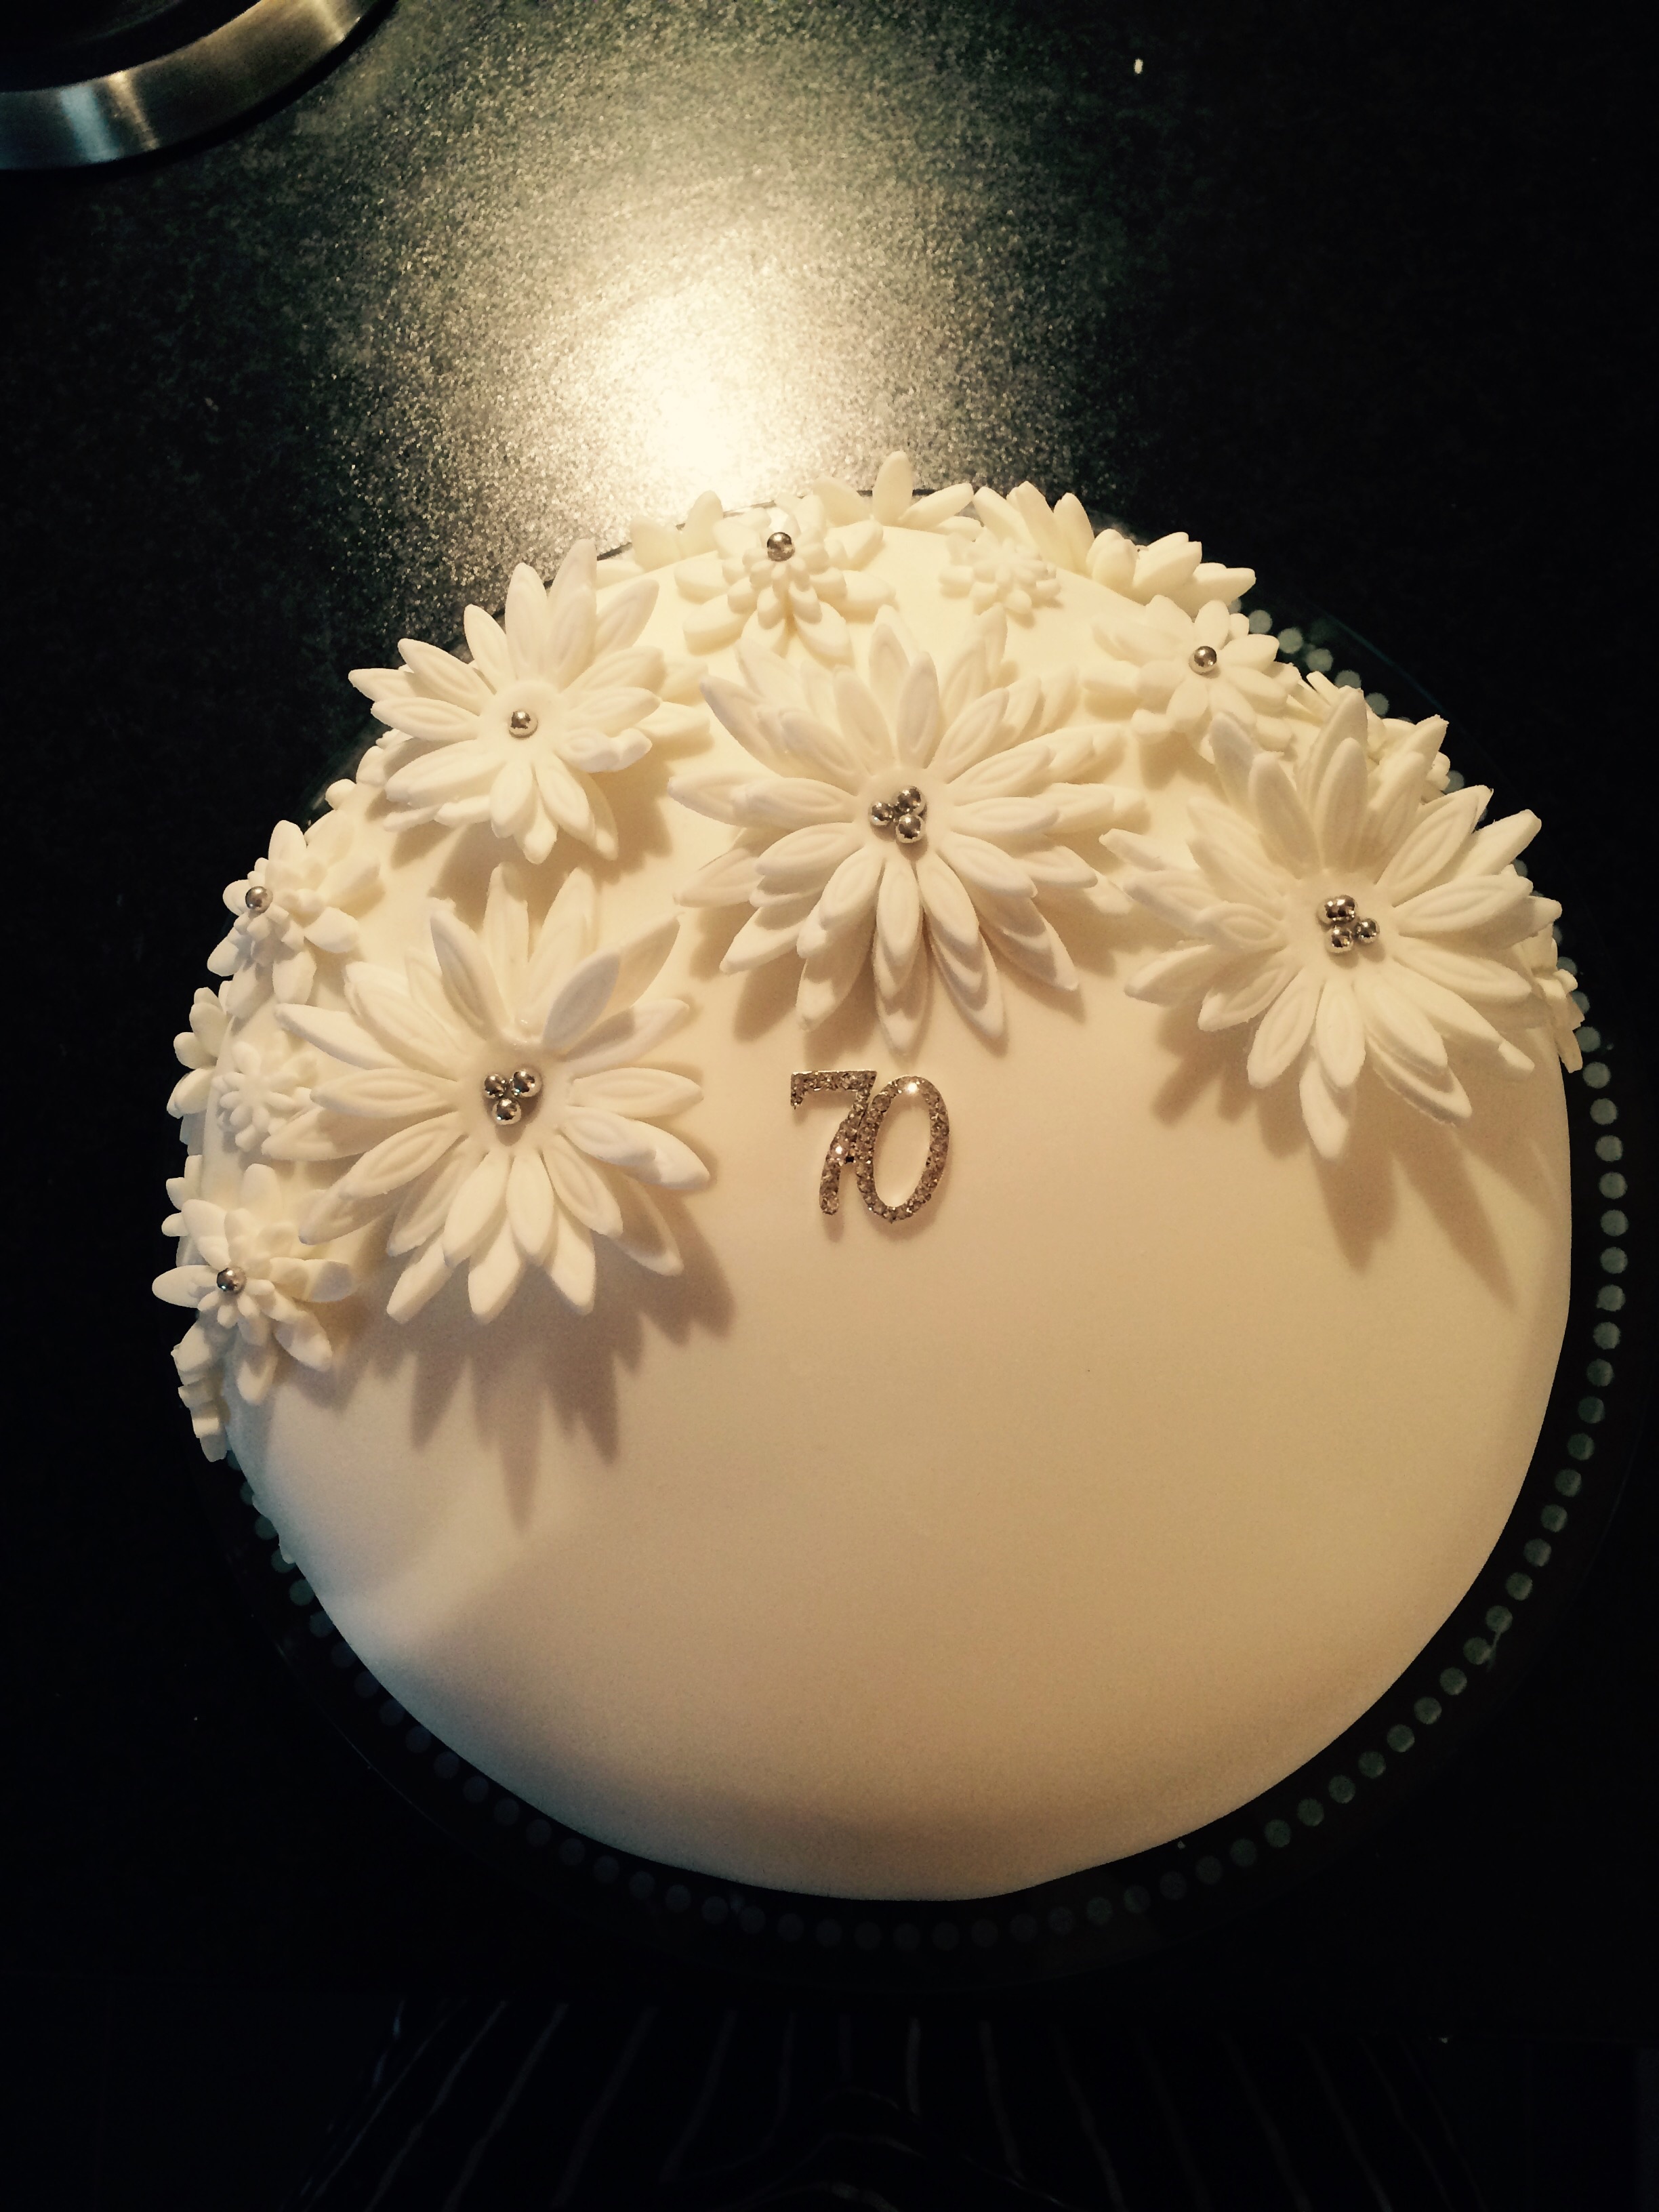 70th BIRTHDAY CAKE – Sooperlicious Cakes